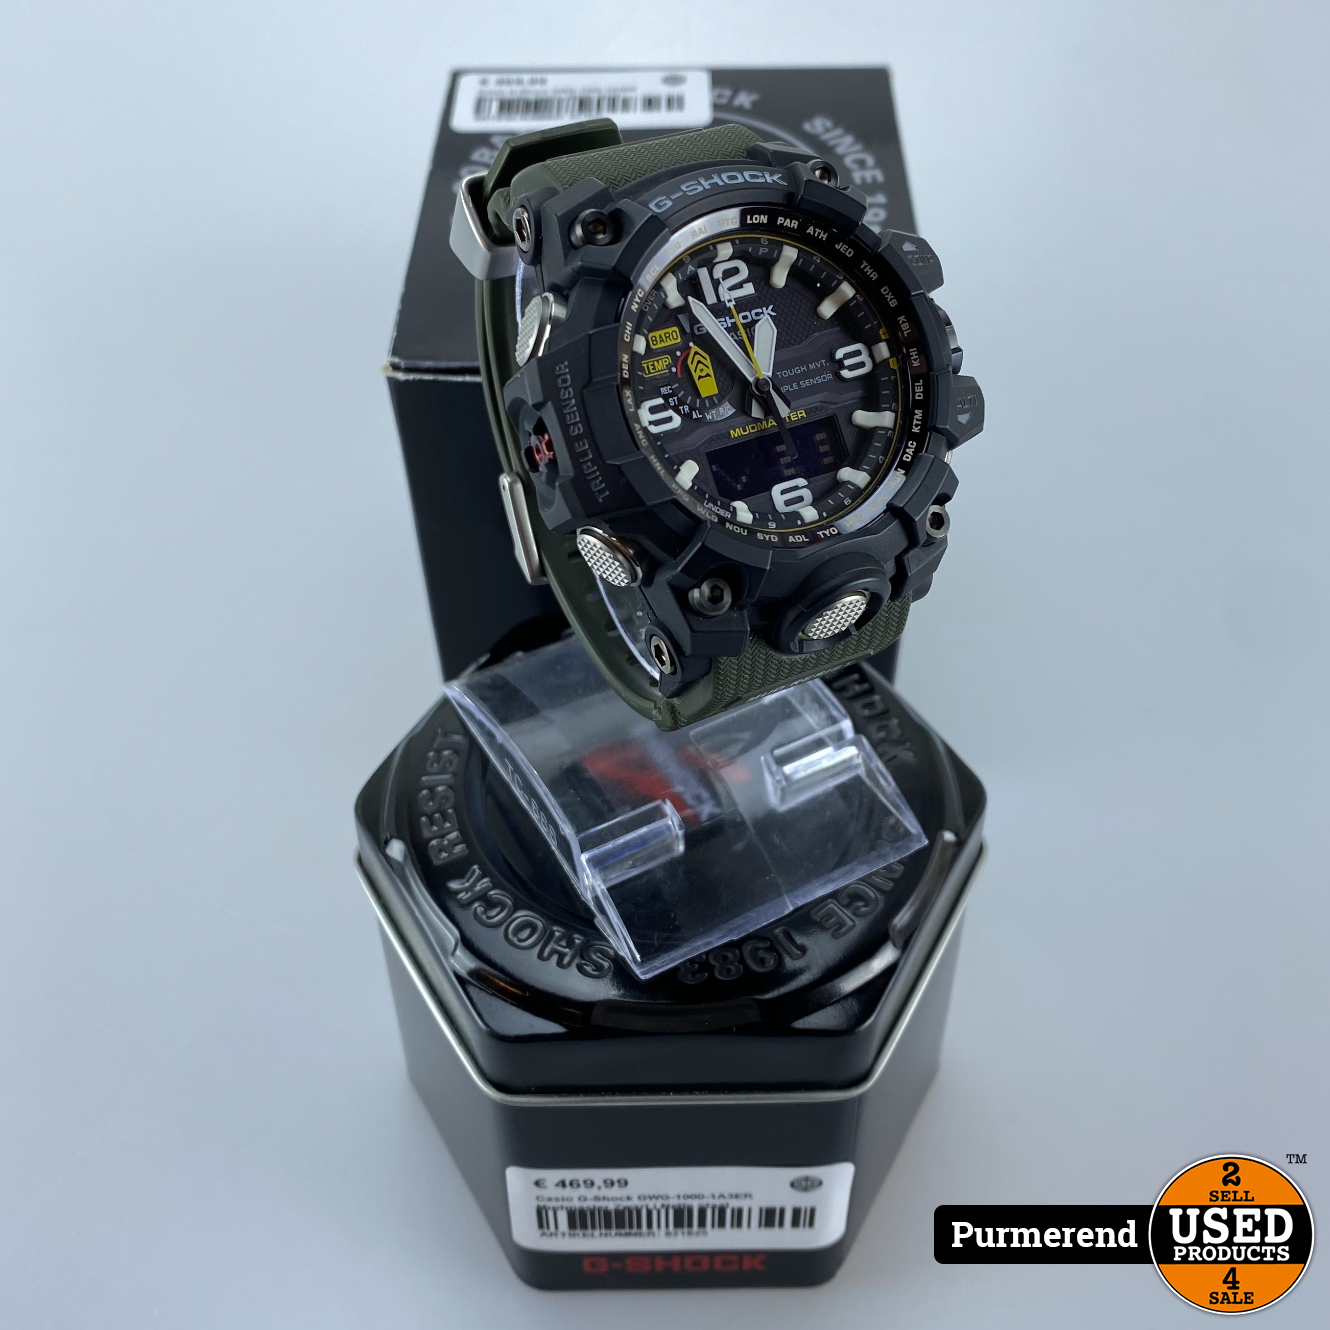 Uitreiken Bank Megalopolis Casio G-Shock GWG-1000-1A3ER Mudmaster Zwart | Nette staat - Used Products  Purmerend